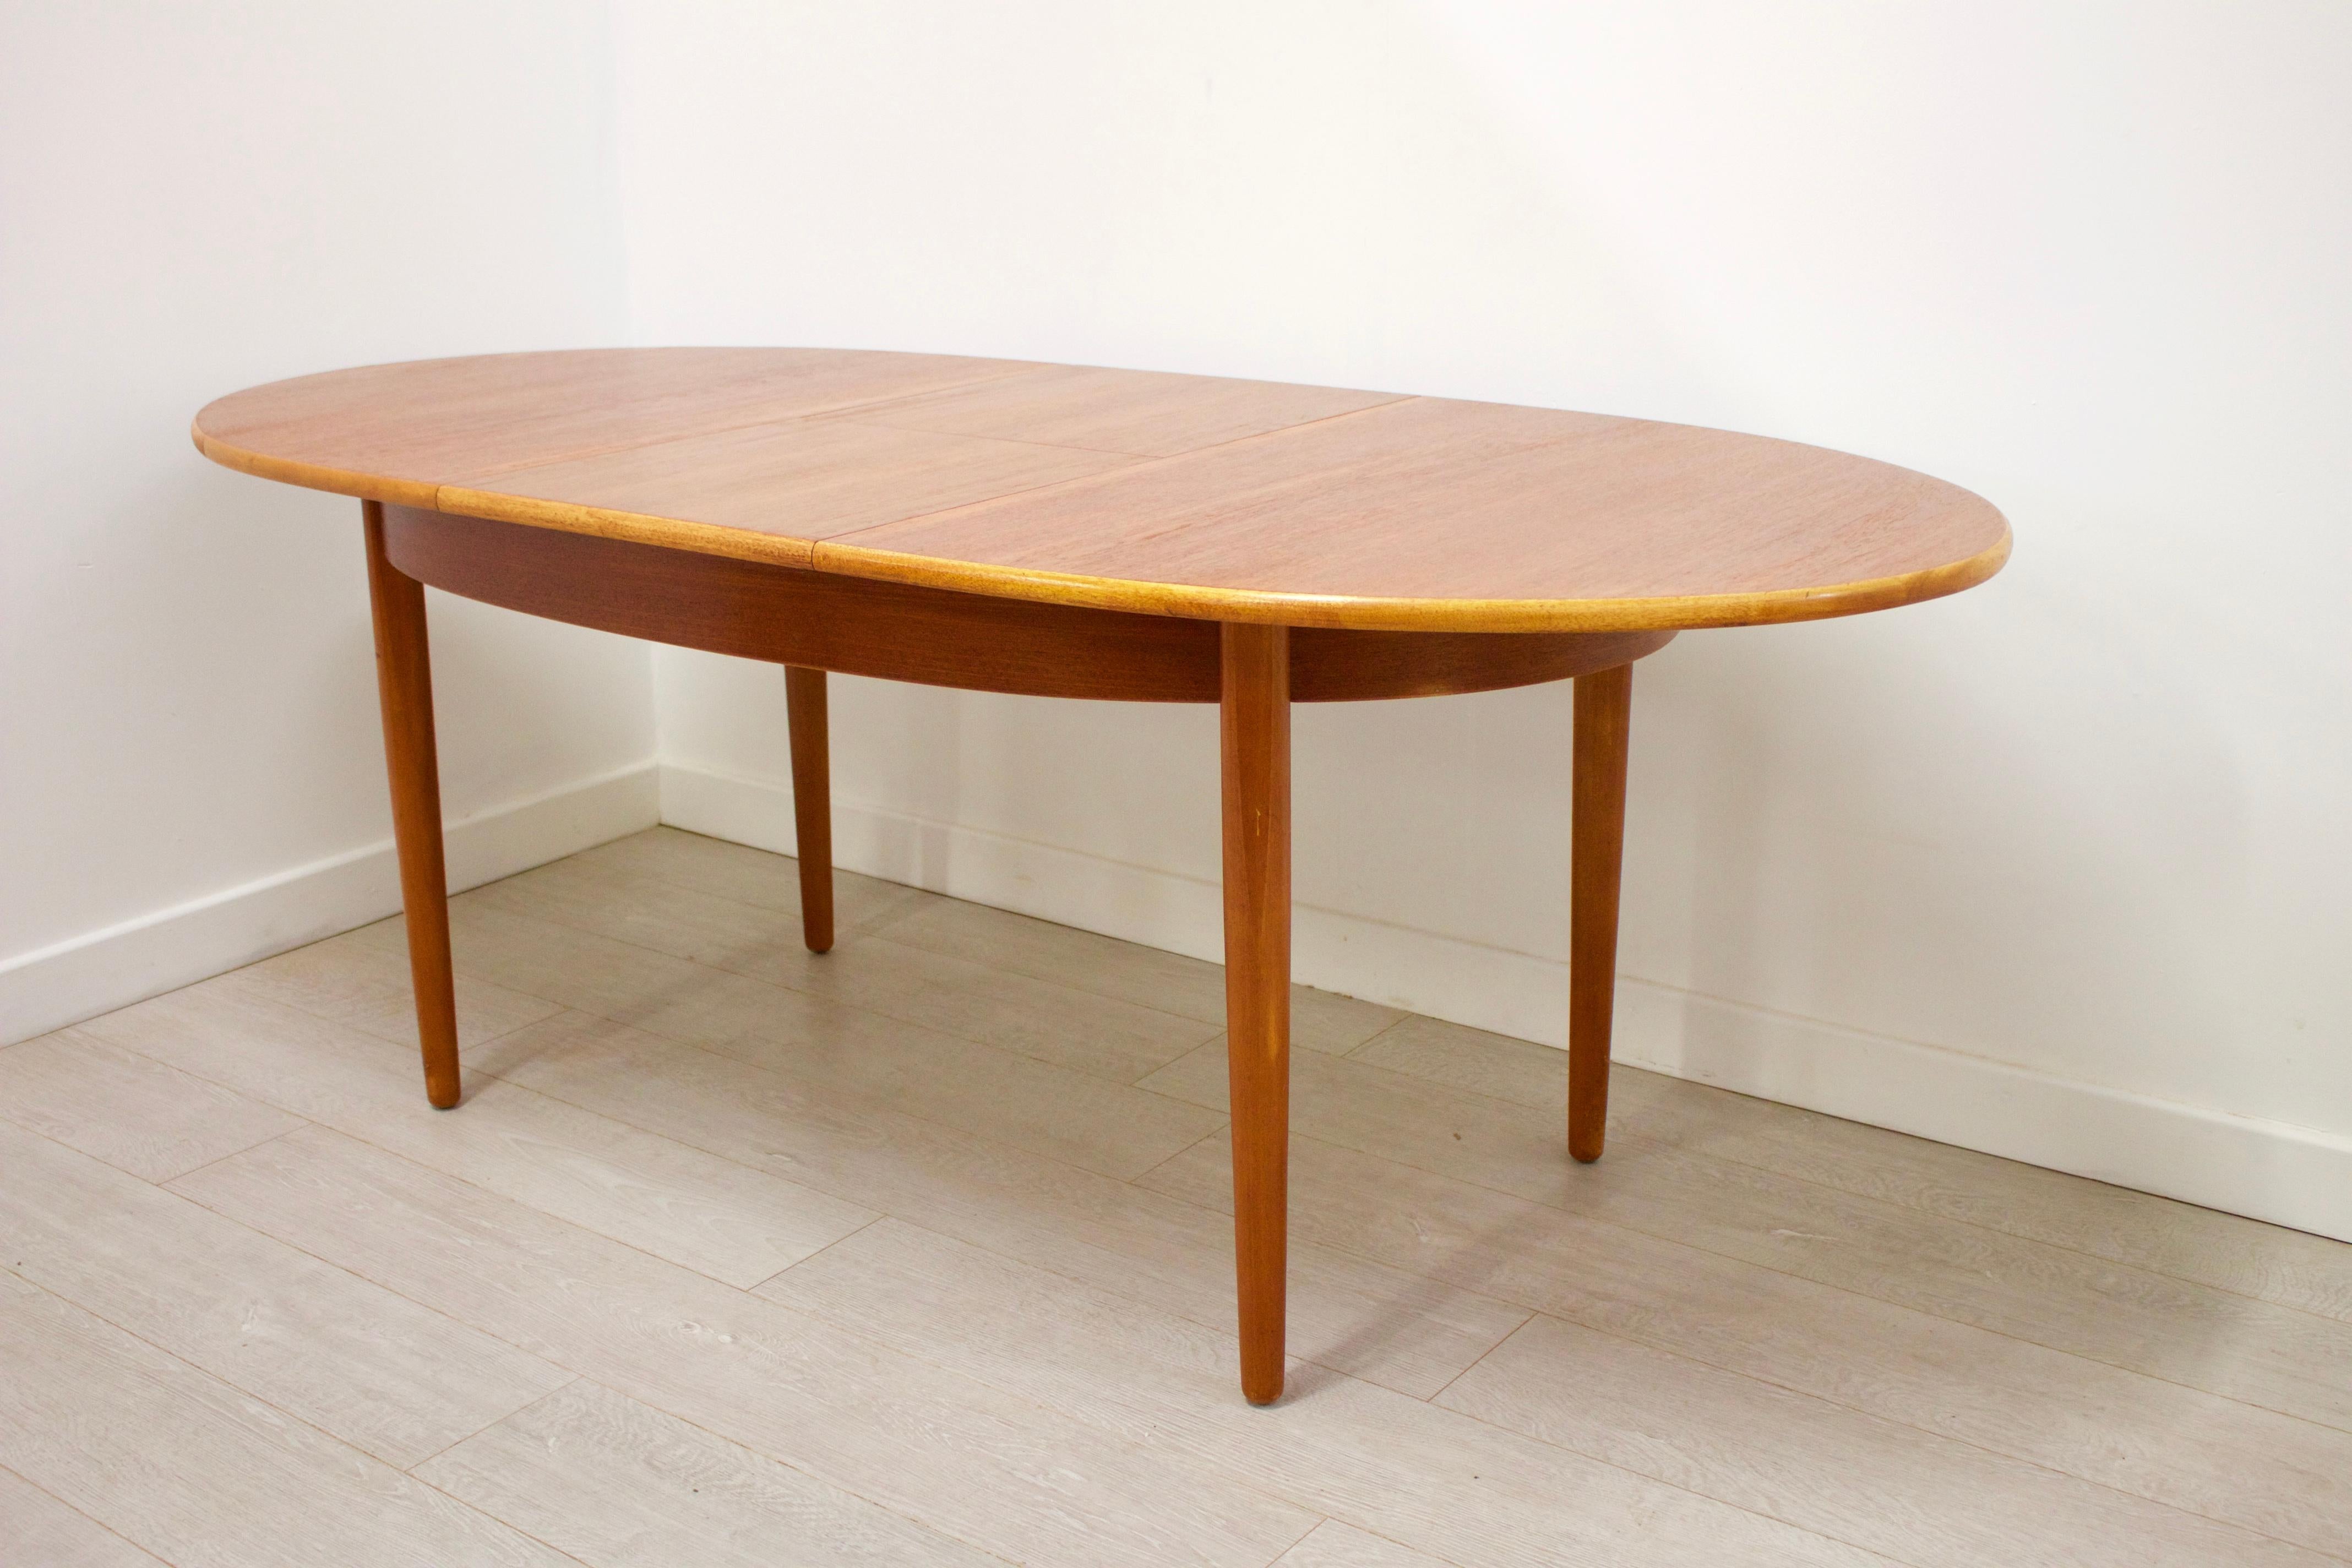 - Midcentury round extending dining table.
- Made from teak and teak veneer
- Extended width 200 cm.